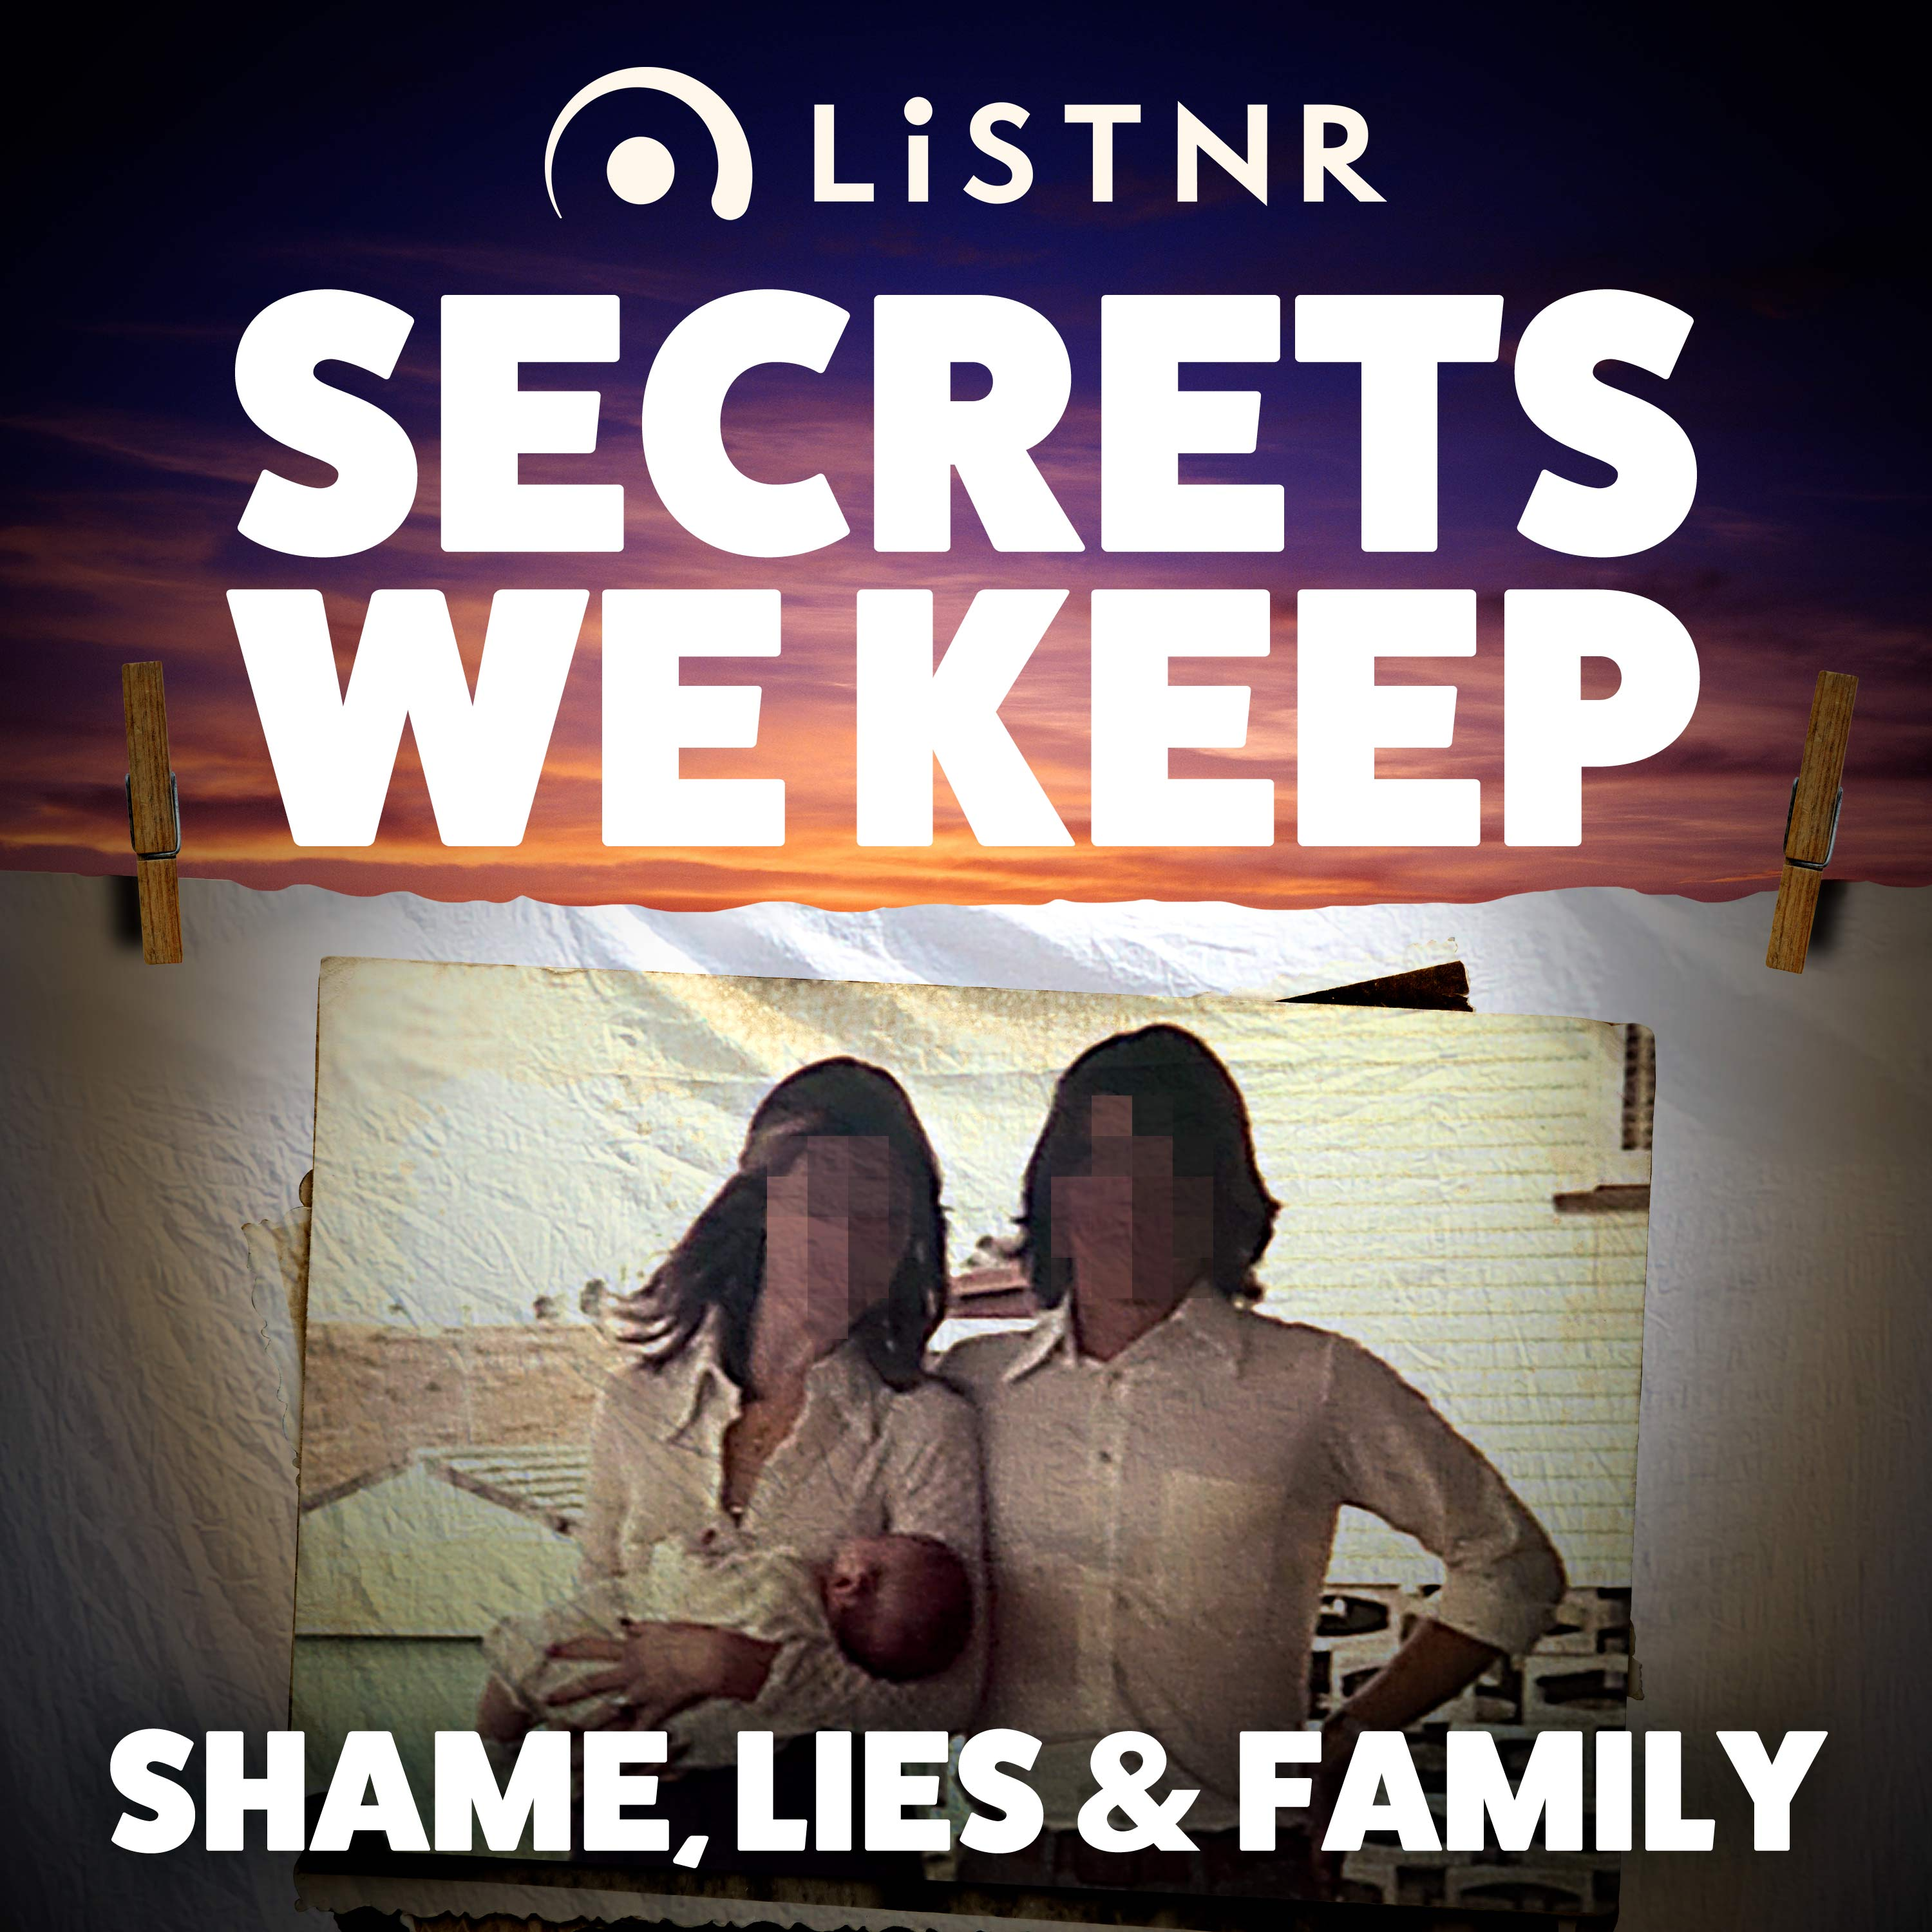 Shame, Lies & Family - The abortion raid